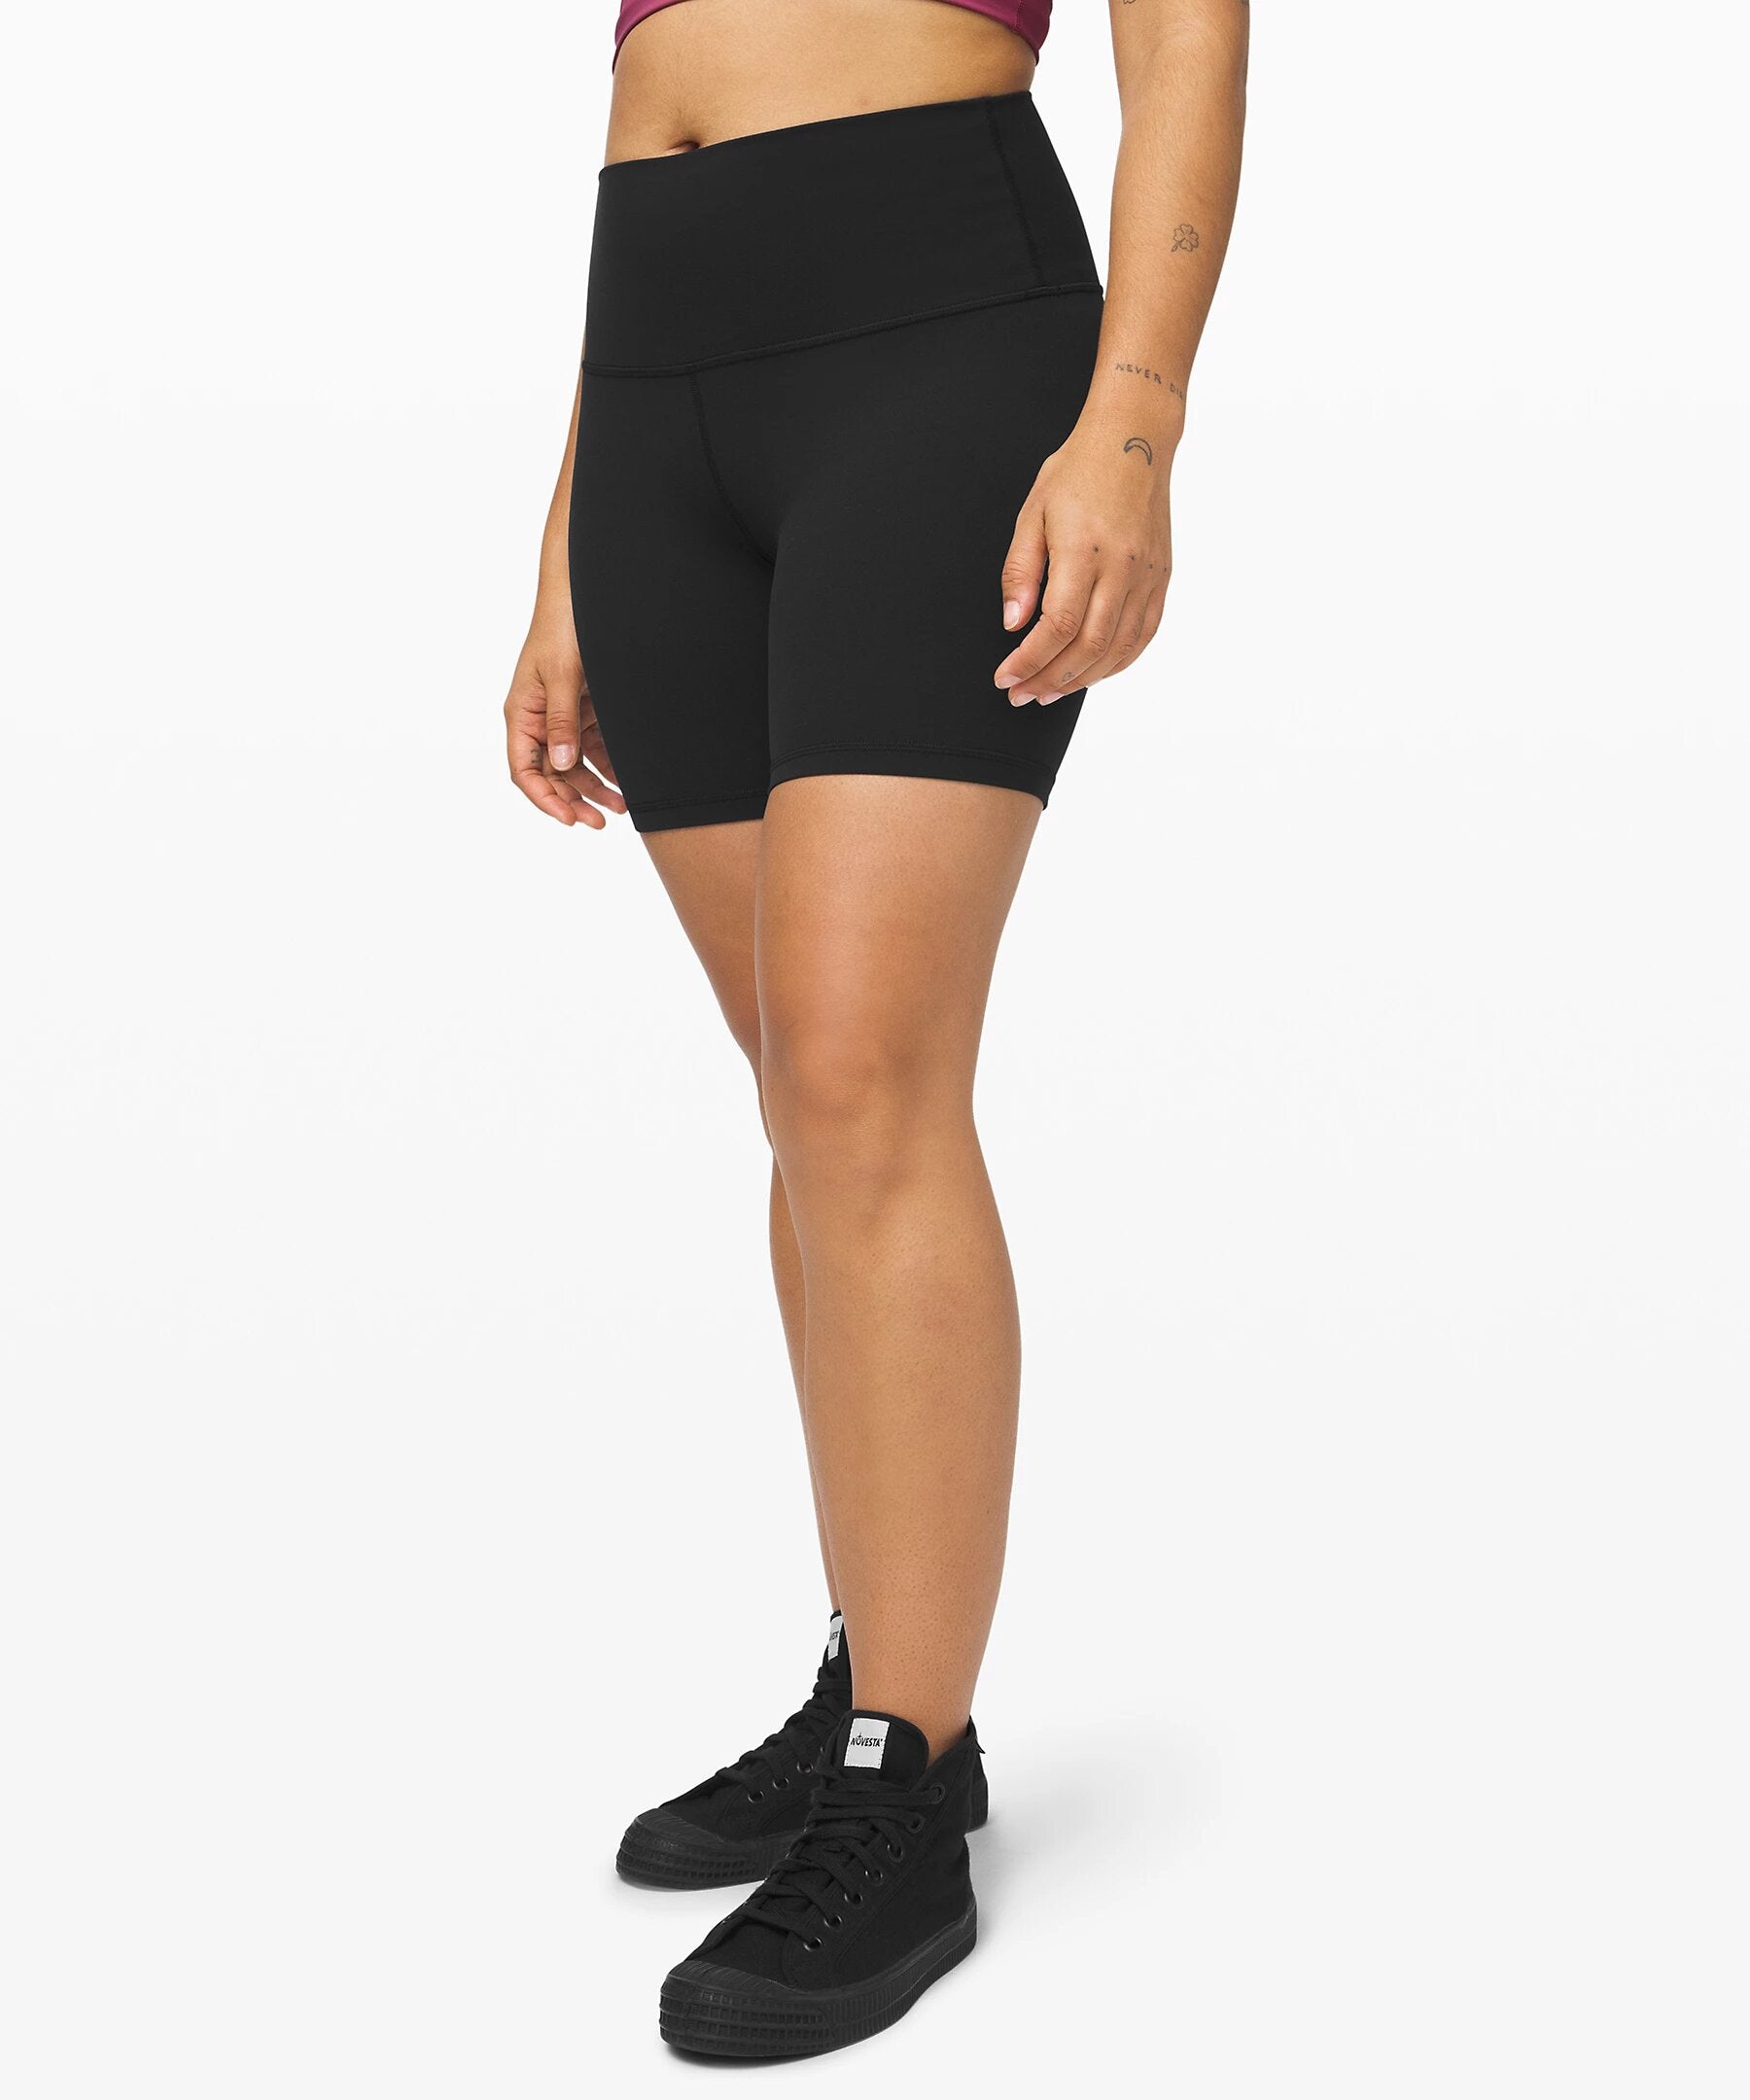 Buy TomTiger Yoga Shorts for Women Tummy Control High Waist Biker